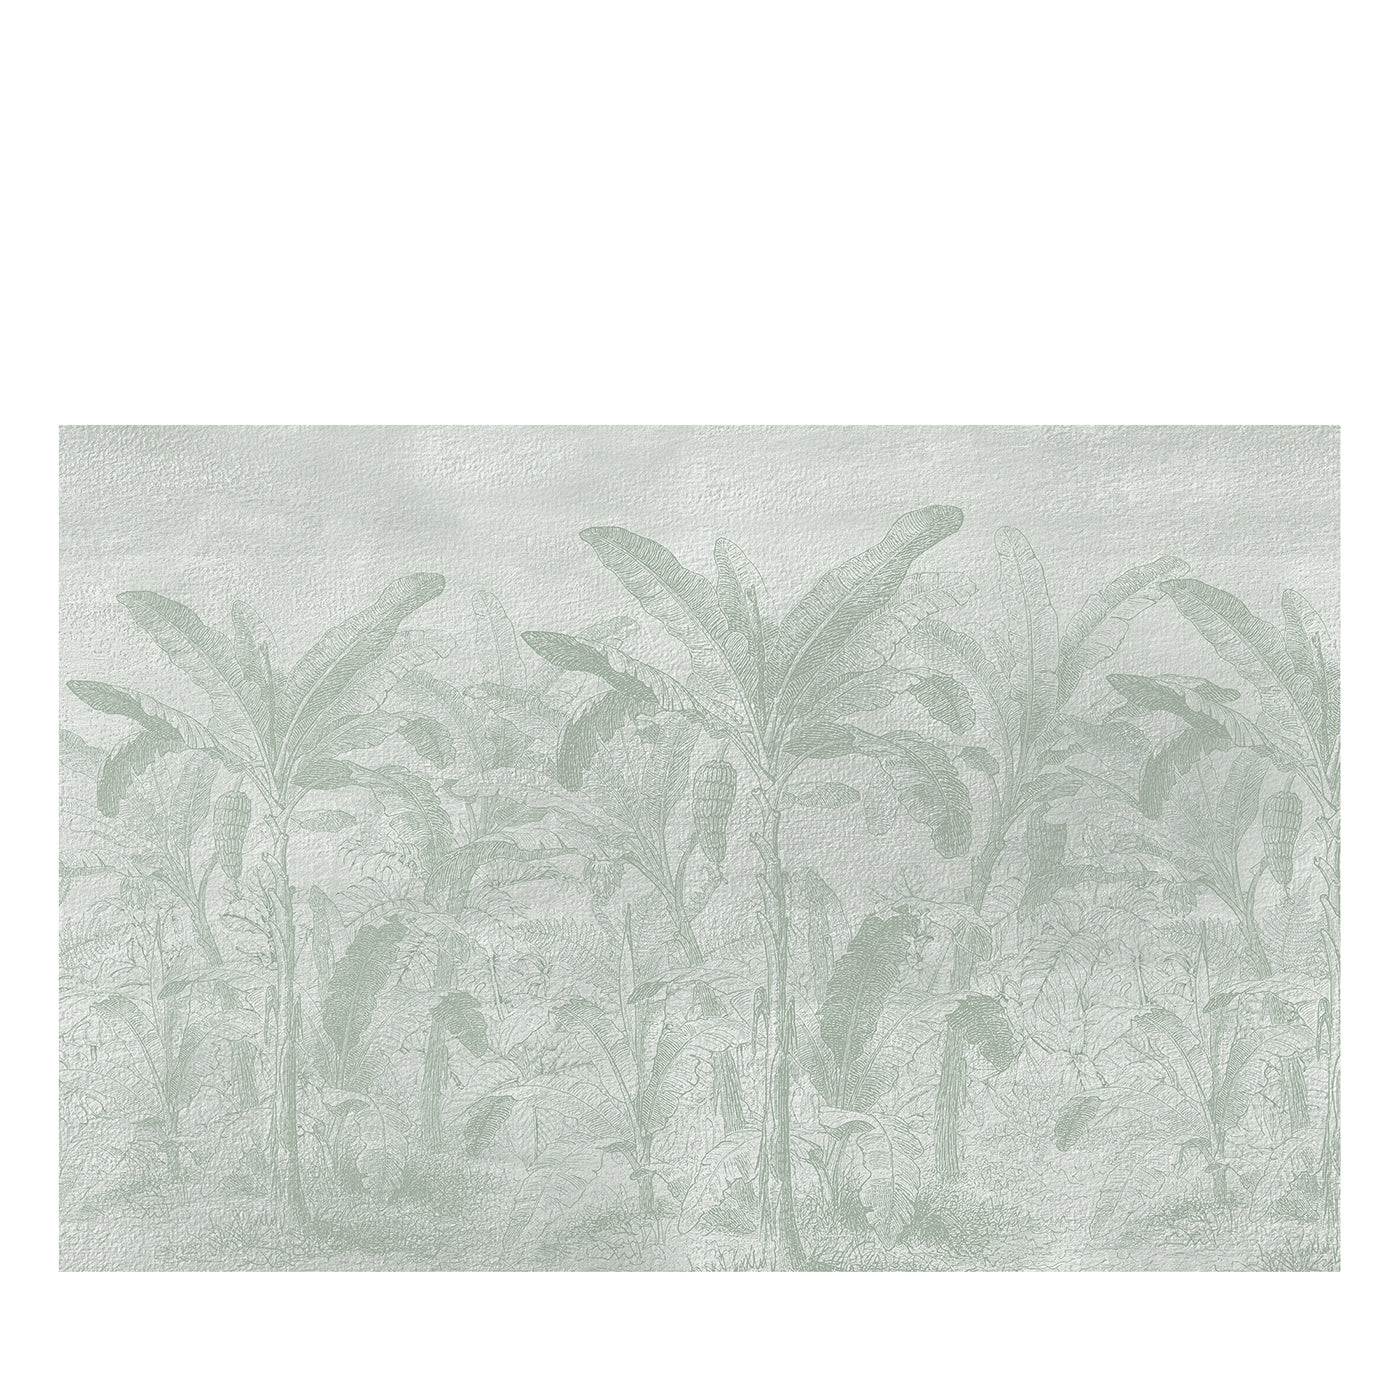 Green Tropical forest textured wallpaper - Main view